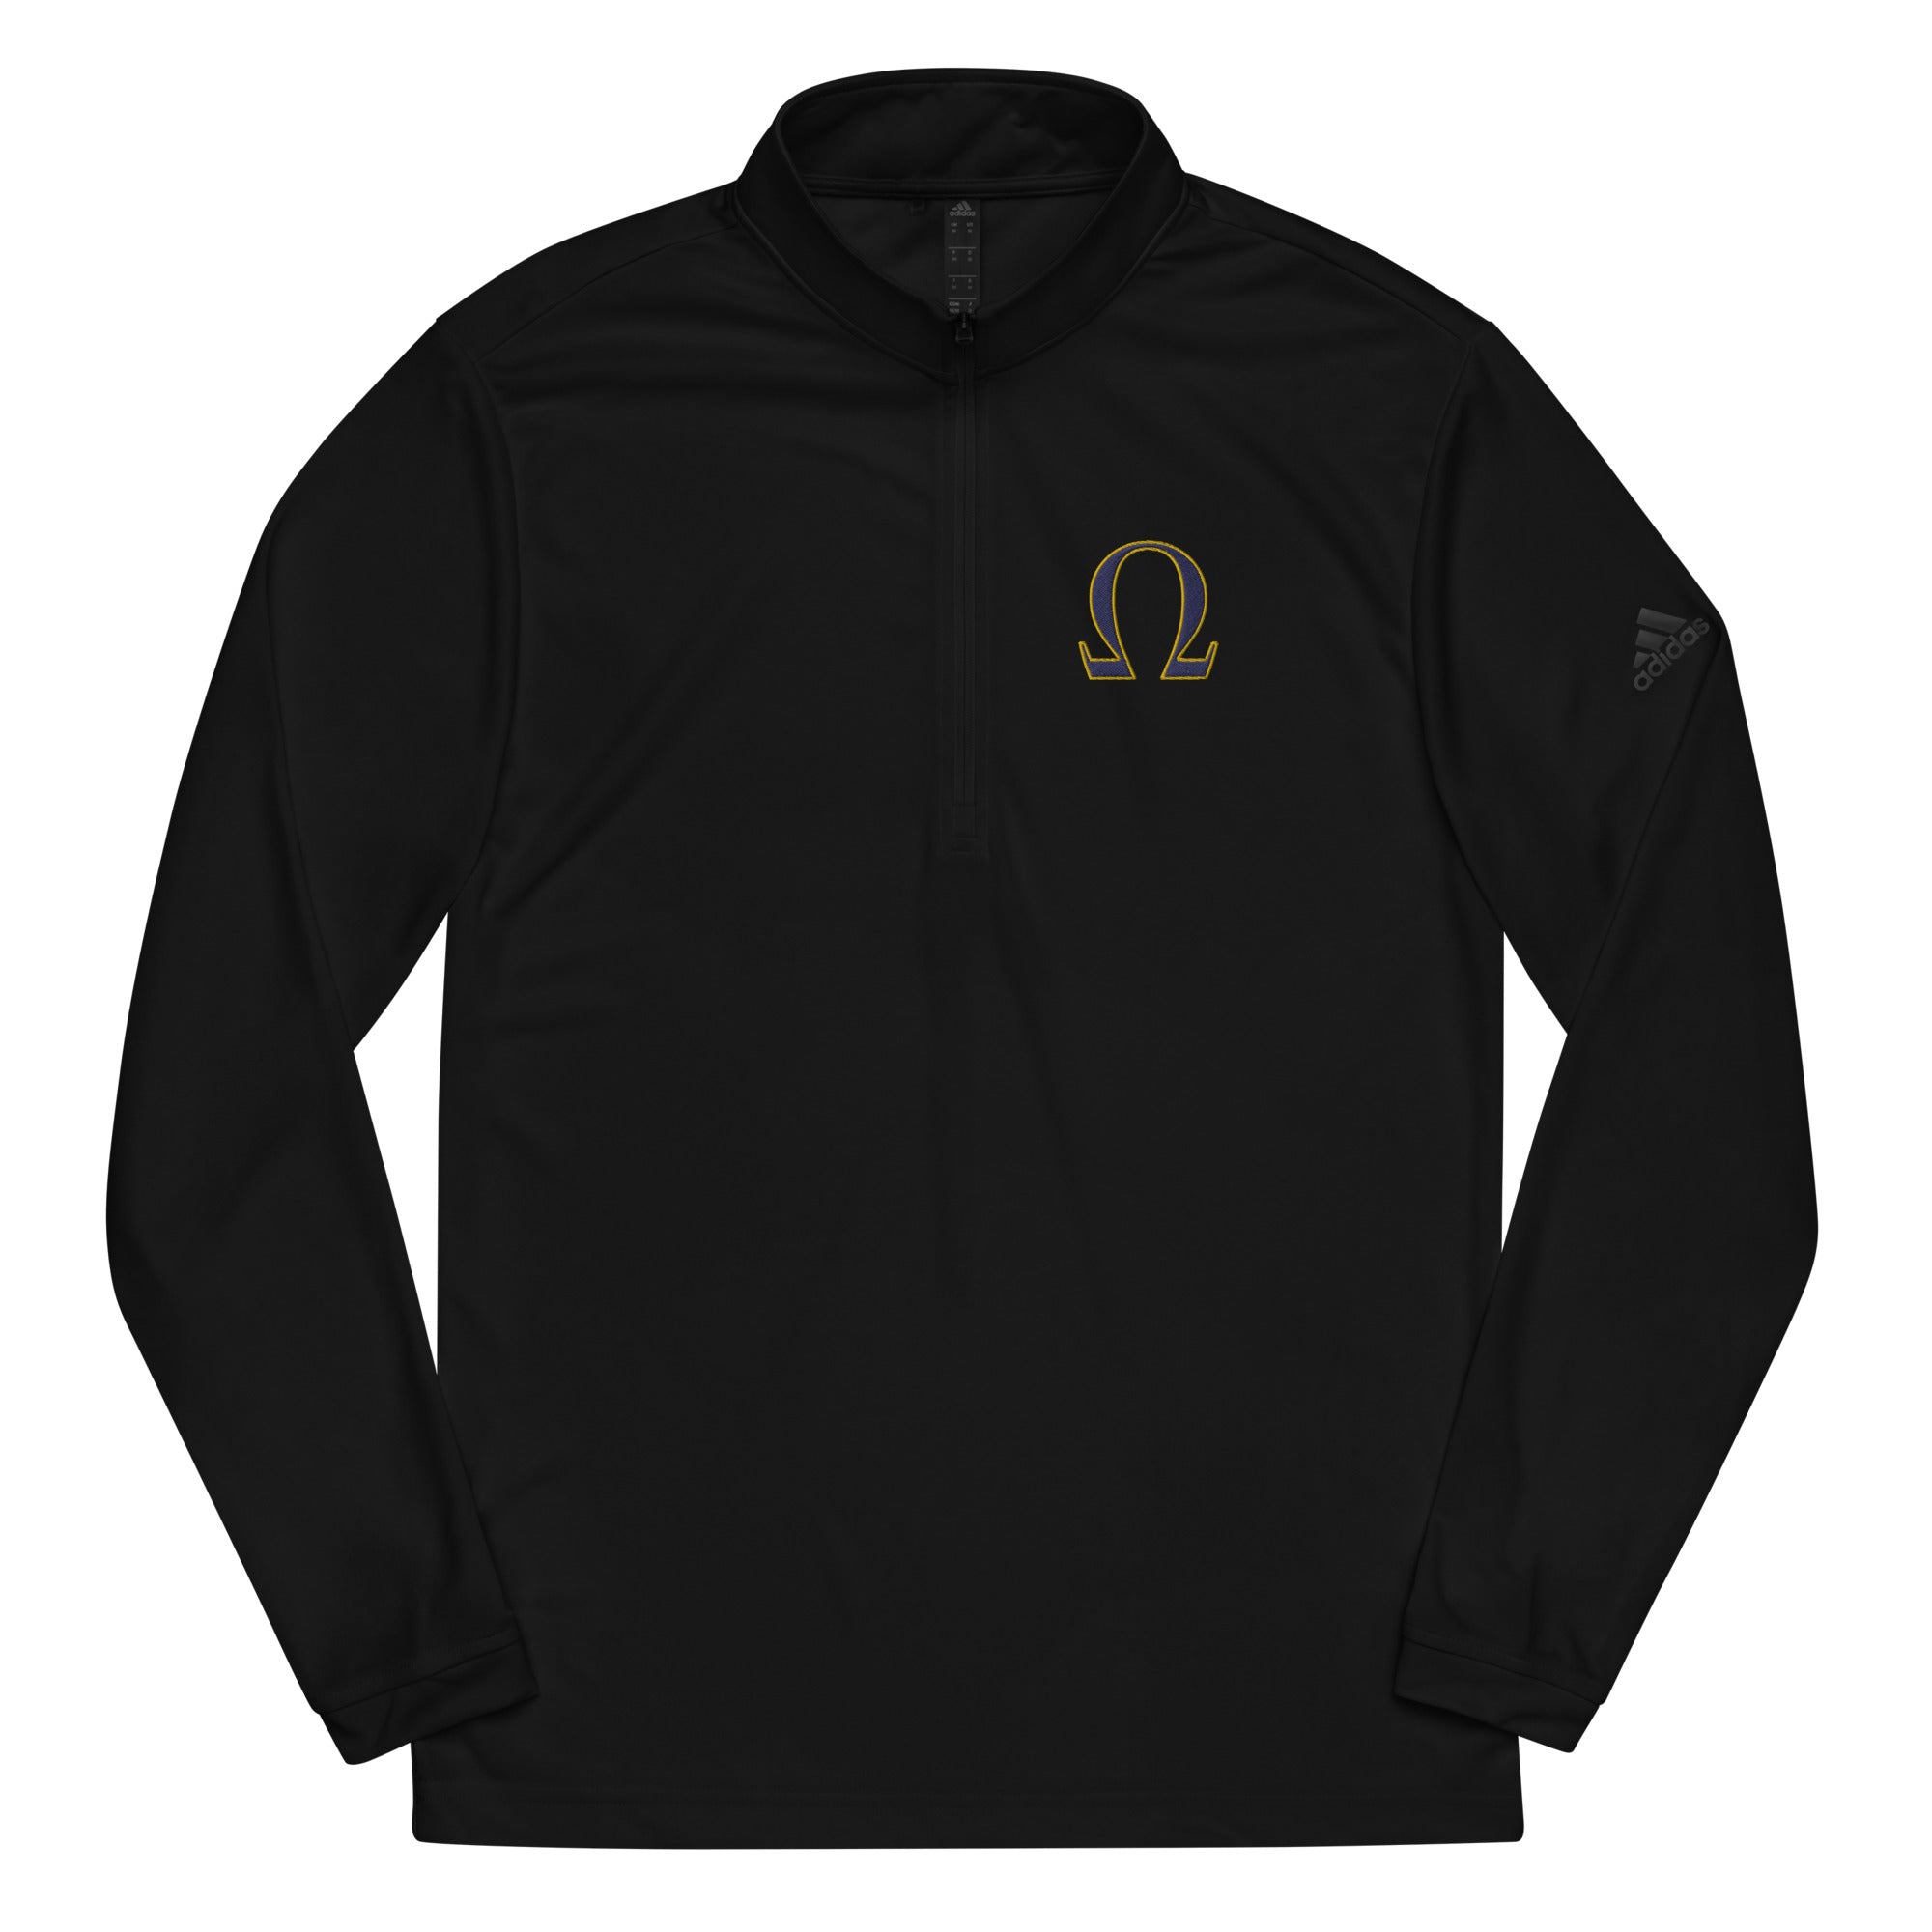 Omega Adidas Quarter zip pullover